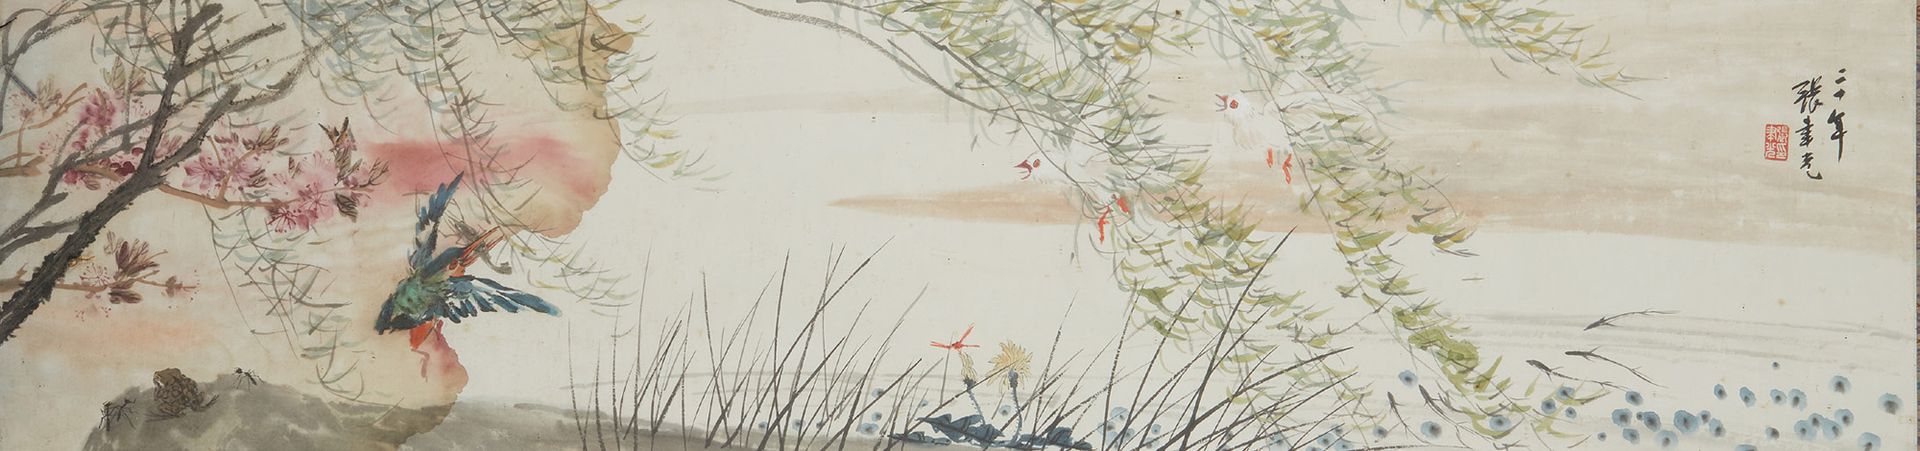 CHINE, XXe siècle 纸上水墨淡彩横幅画，描绘了垂柳枝条间溪流两岸的鸟儿和昆虫，出自张宇光（1885-1968）之手。
背面标有 "此水彩画让人联&hellip;